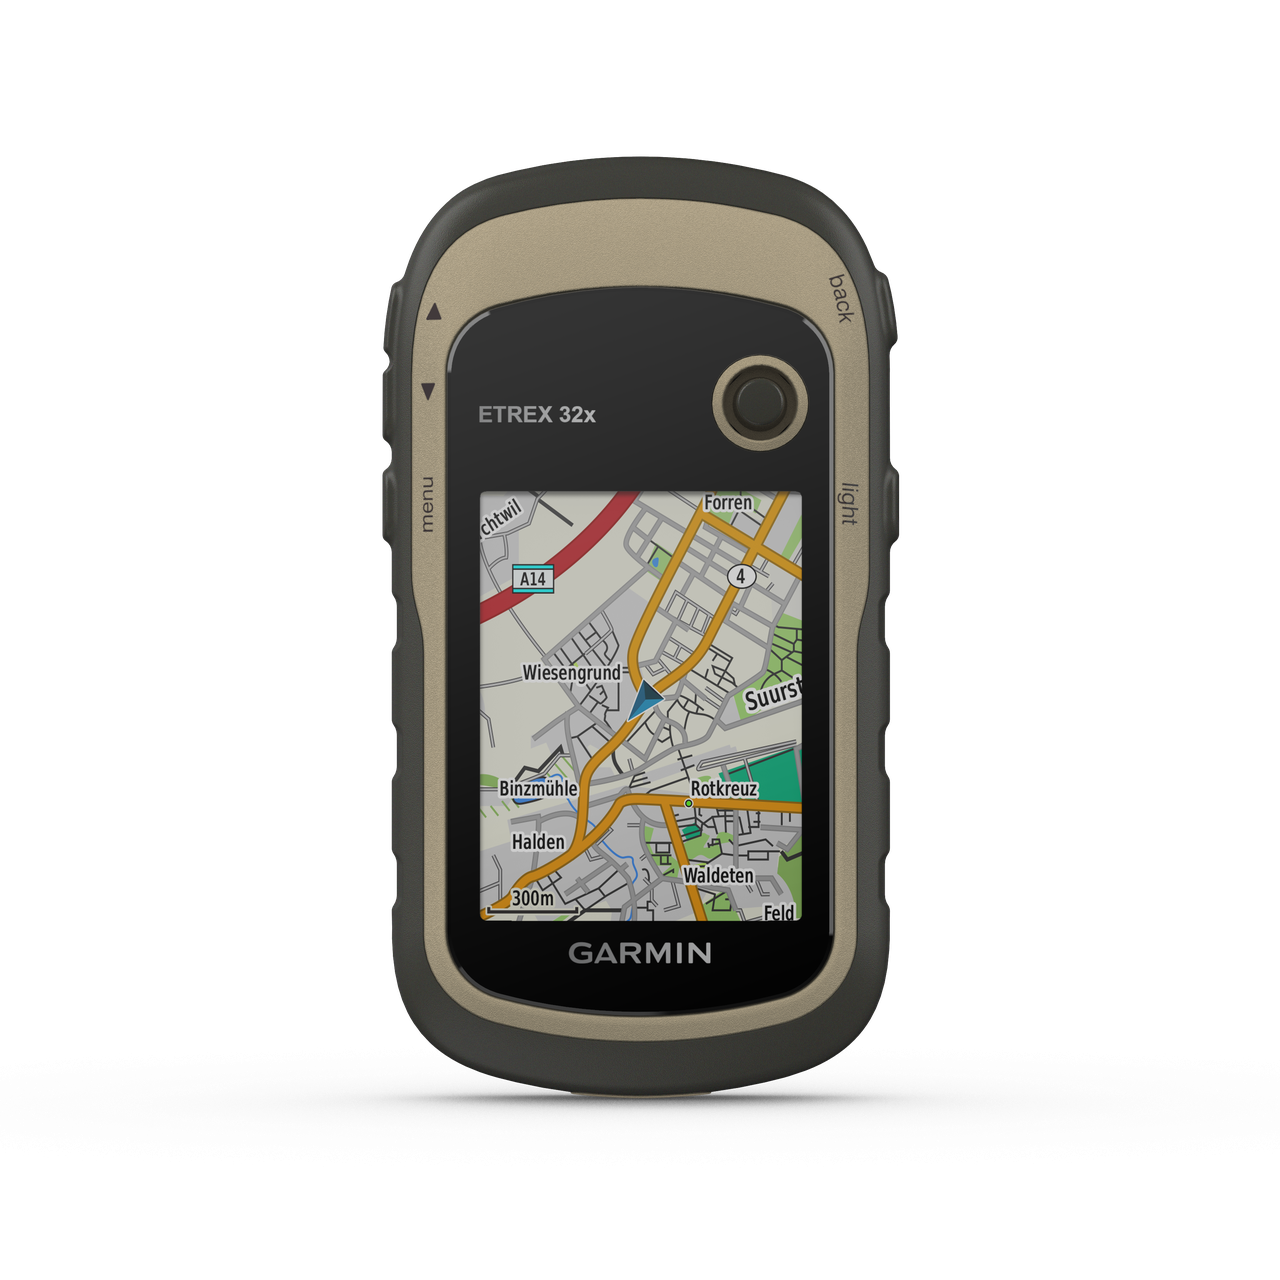 Navigator GPS